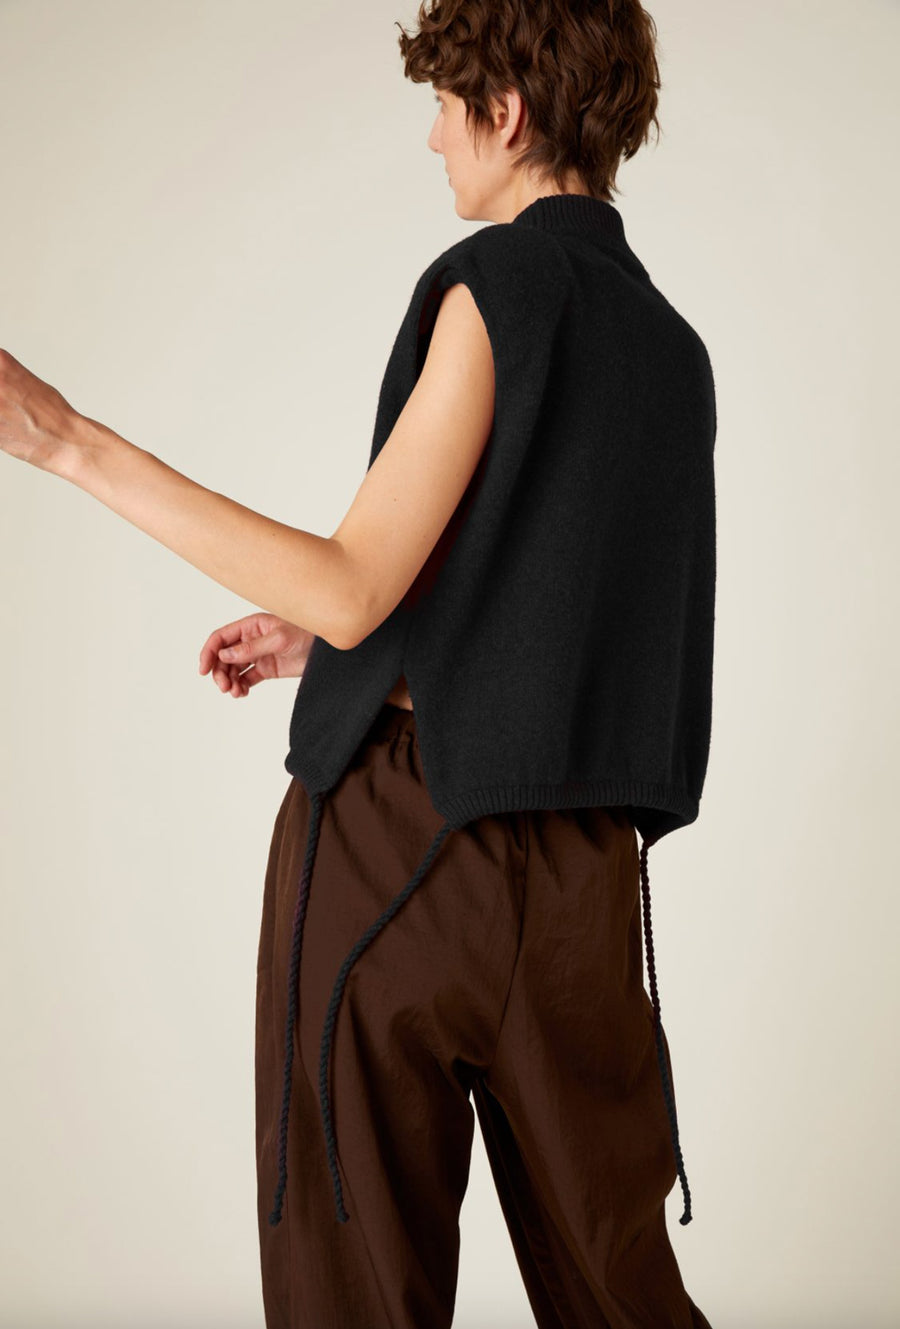 VERONIQUE LEROY - Drawstring Knit Vest in Black